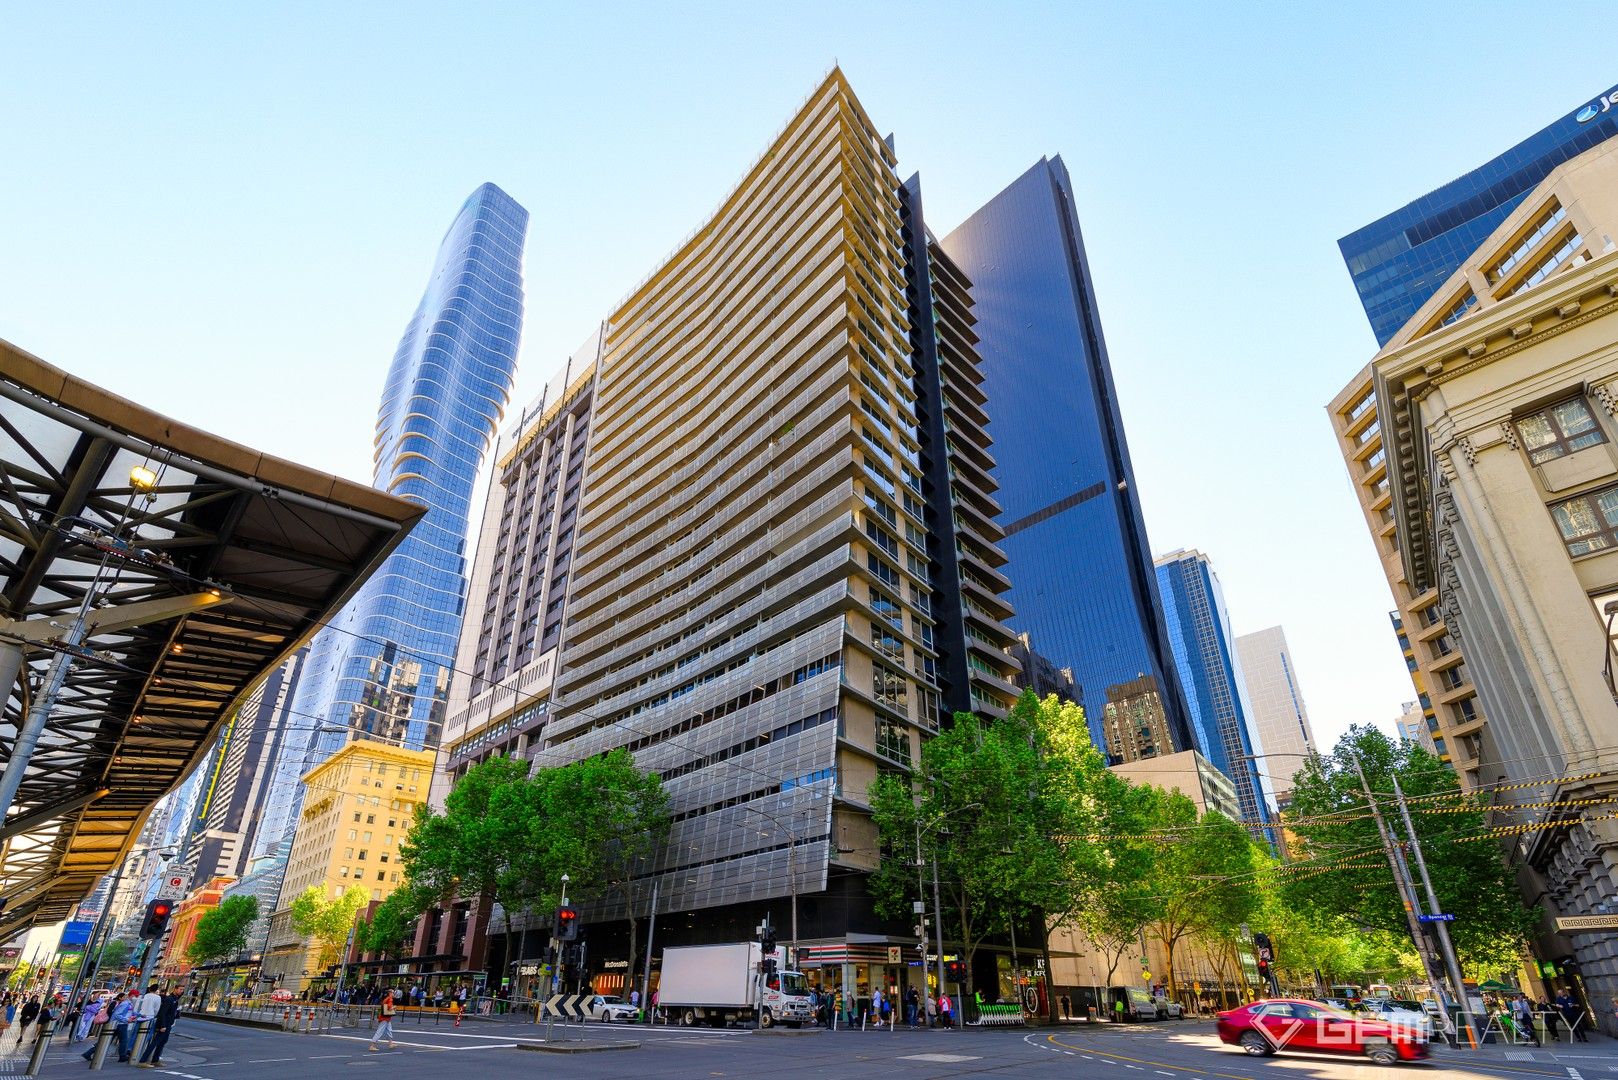 Melbourne commercial property: Atlas Assurance building on Collins for sale